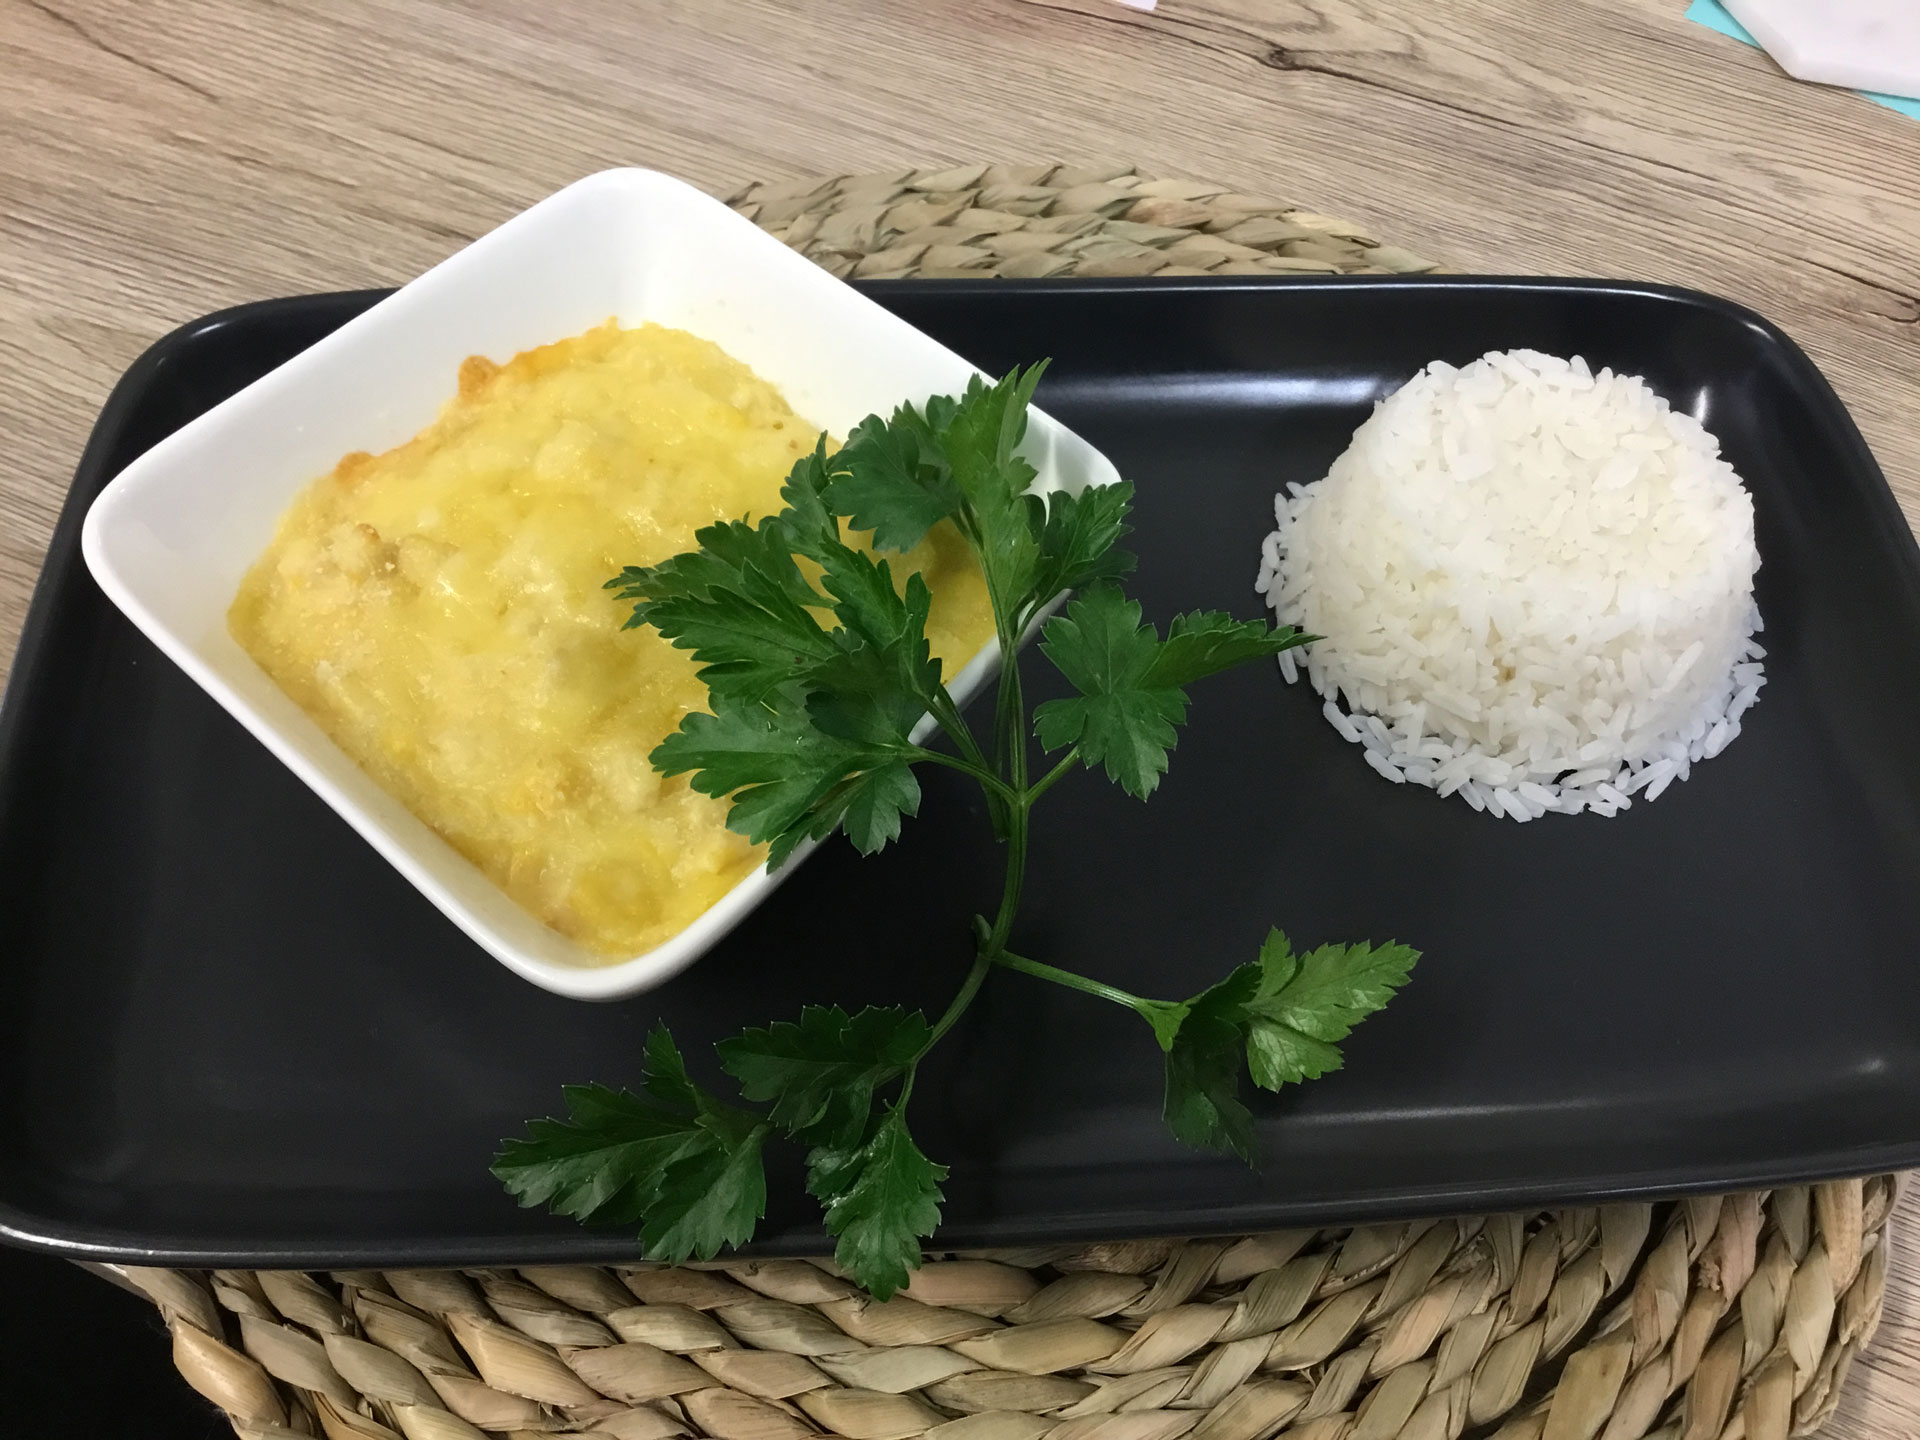 Tasty yellow dish with rice